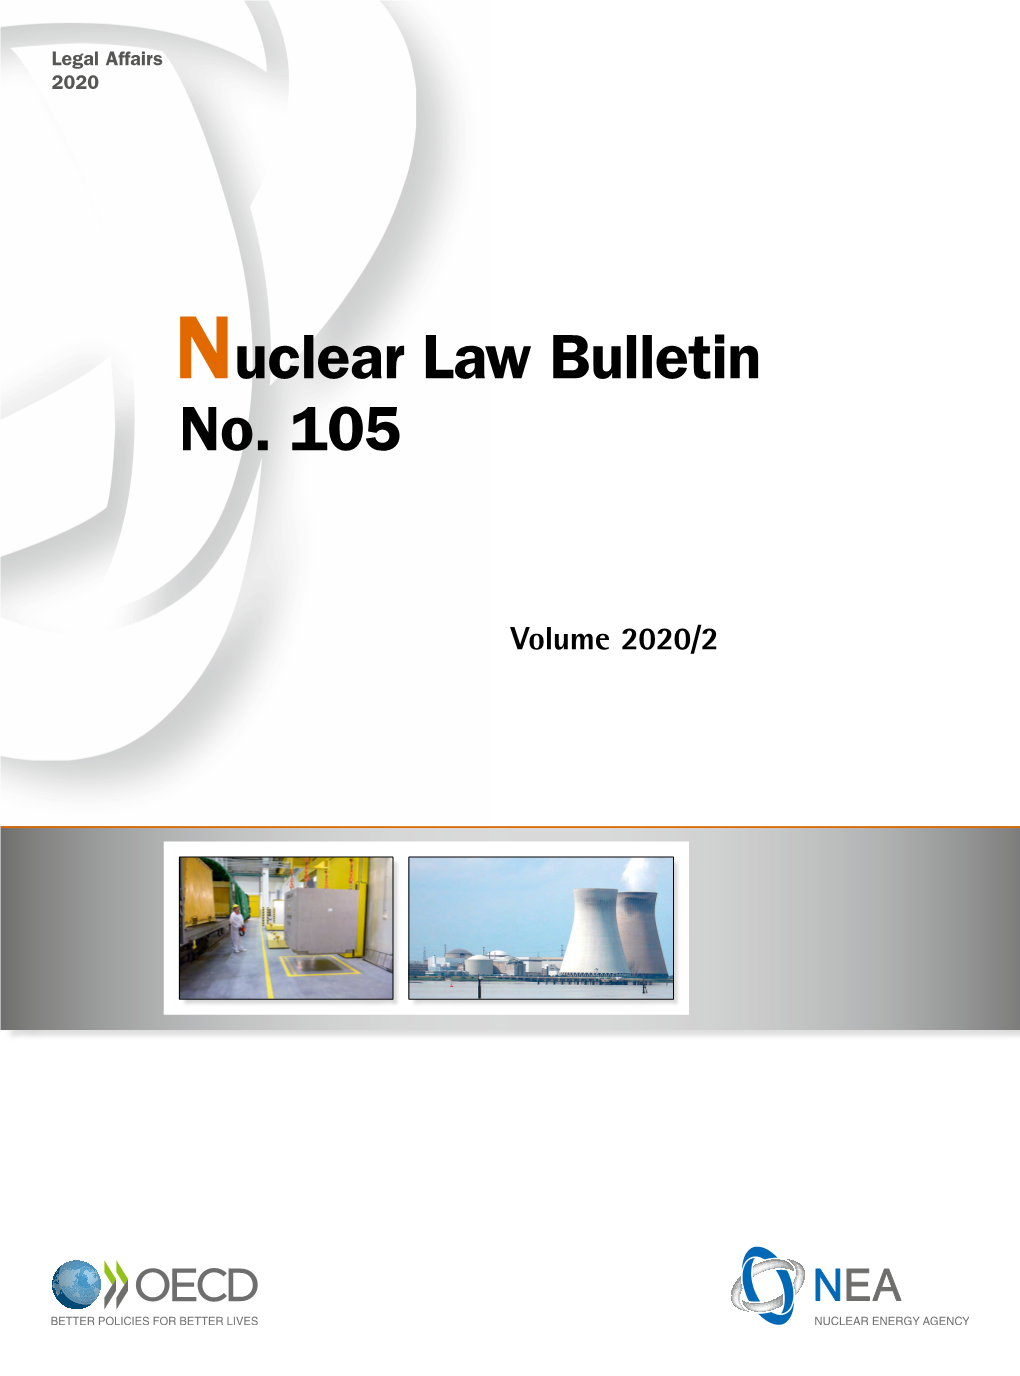 Nuclear Law Bulletin No. 105